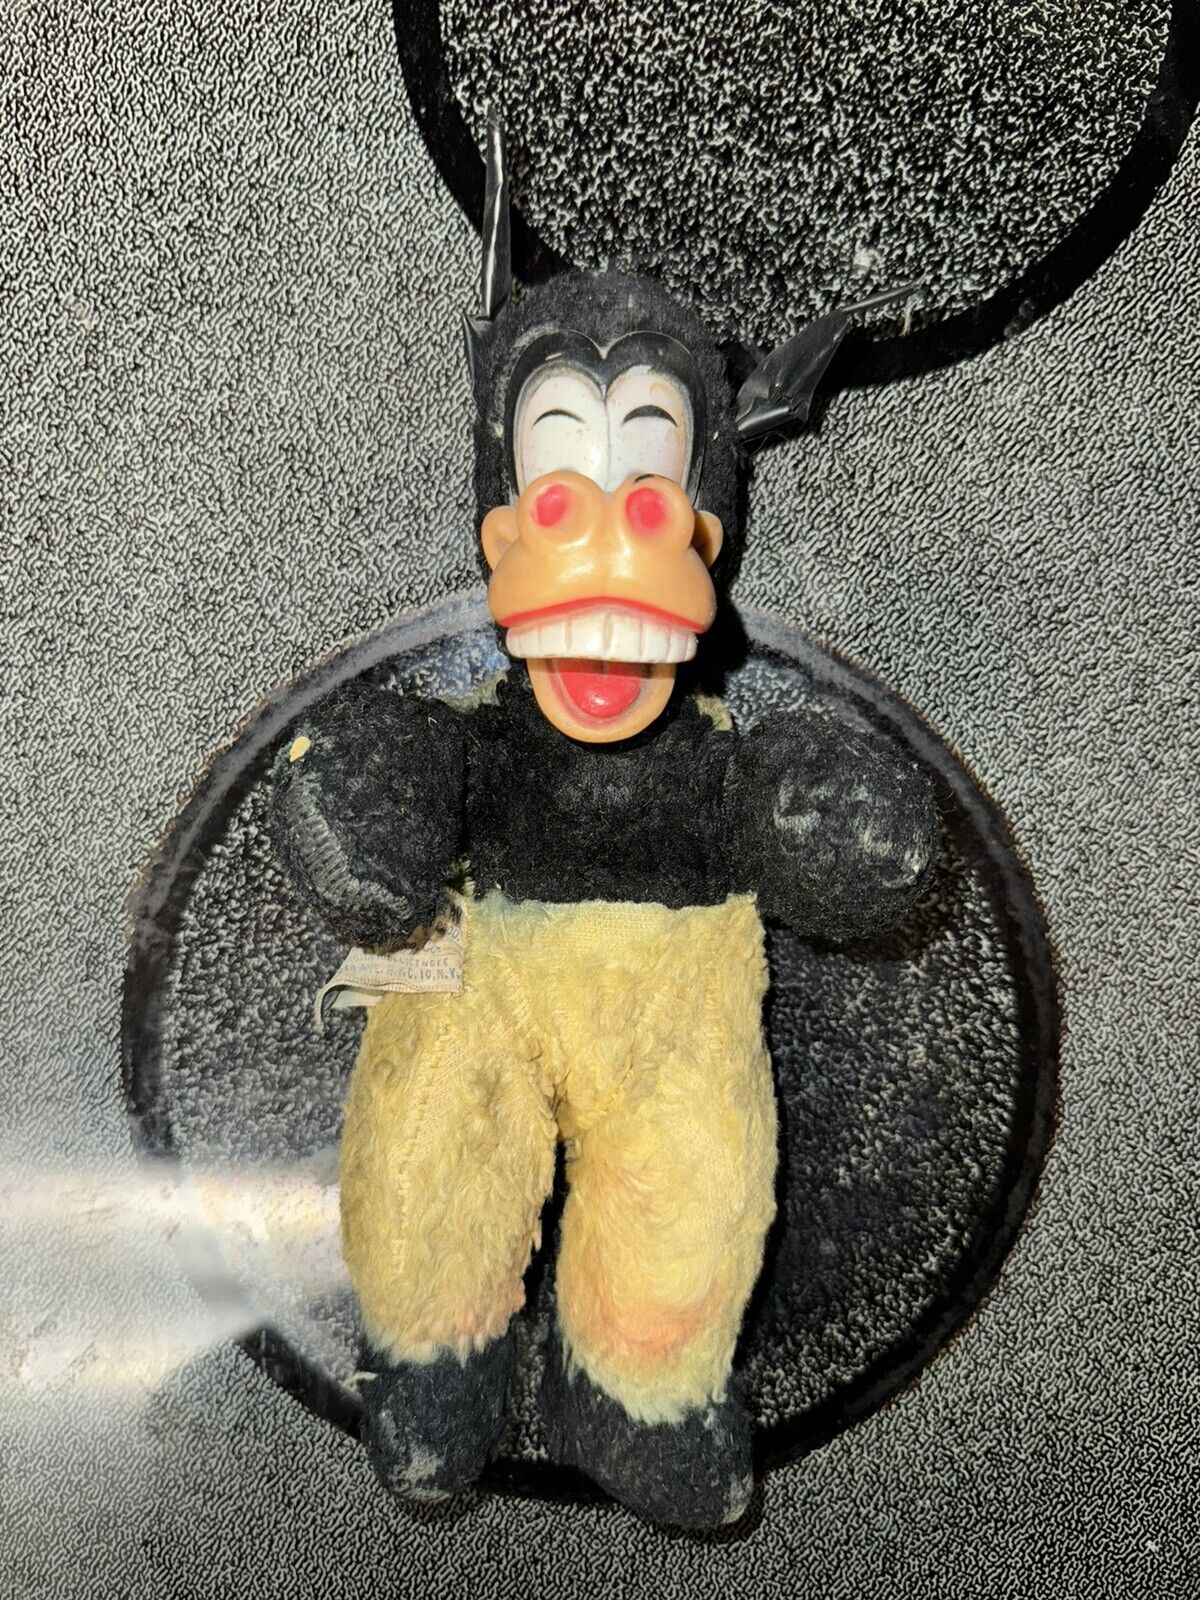 Vintage 1940s Disney Baby Horace Horsecollar GUND Sanifoam Rubber Face Plush